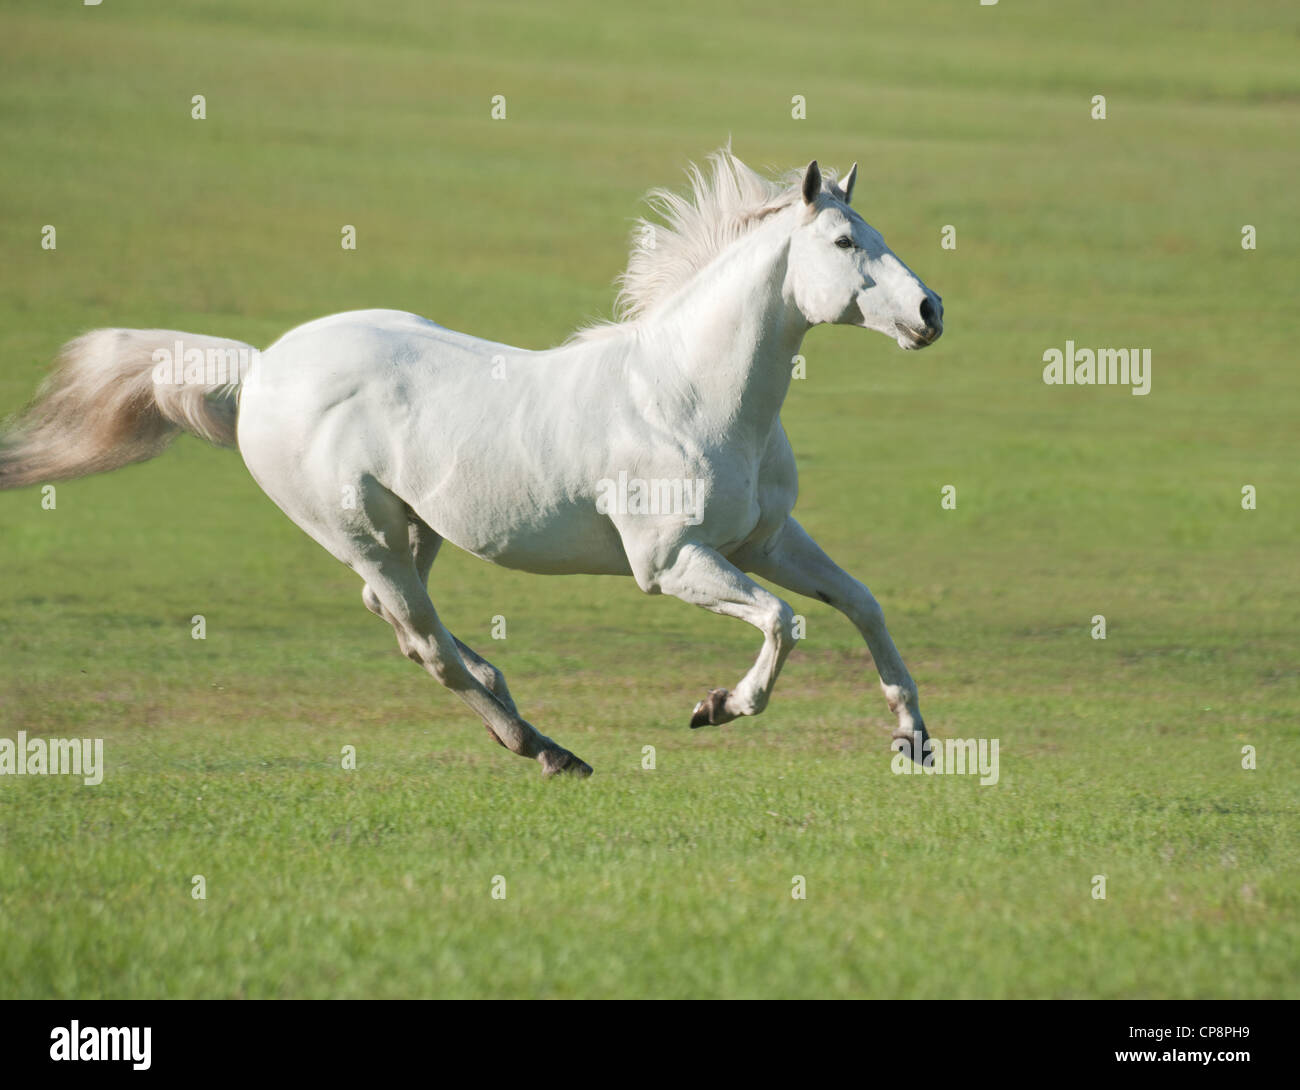 20 year old Thoroughbred horse stallion Stock Photo